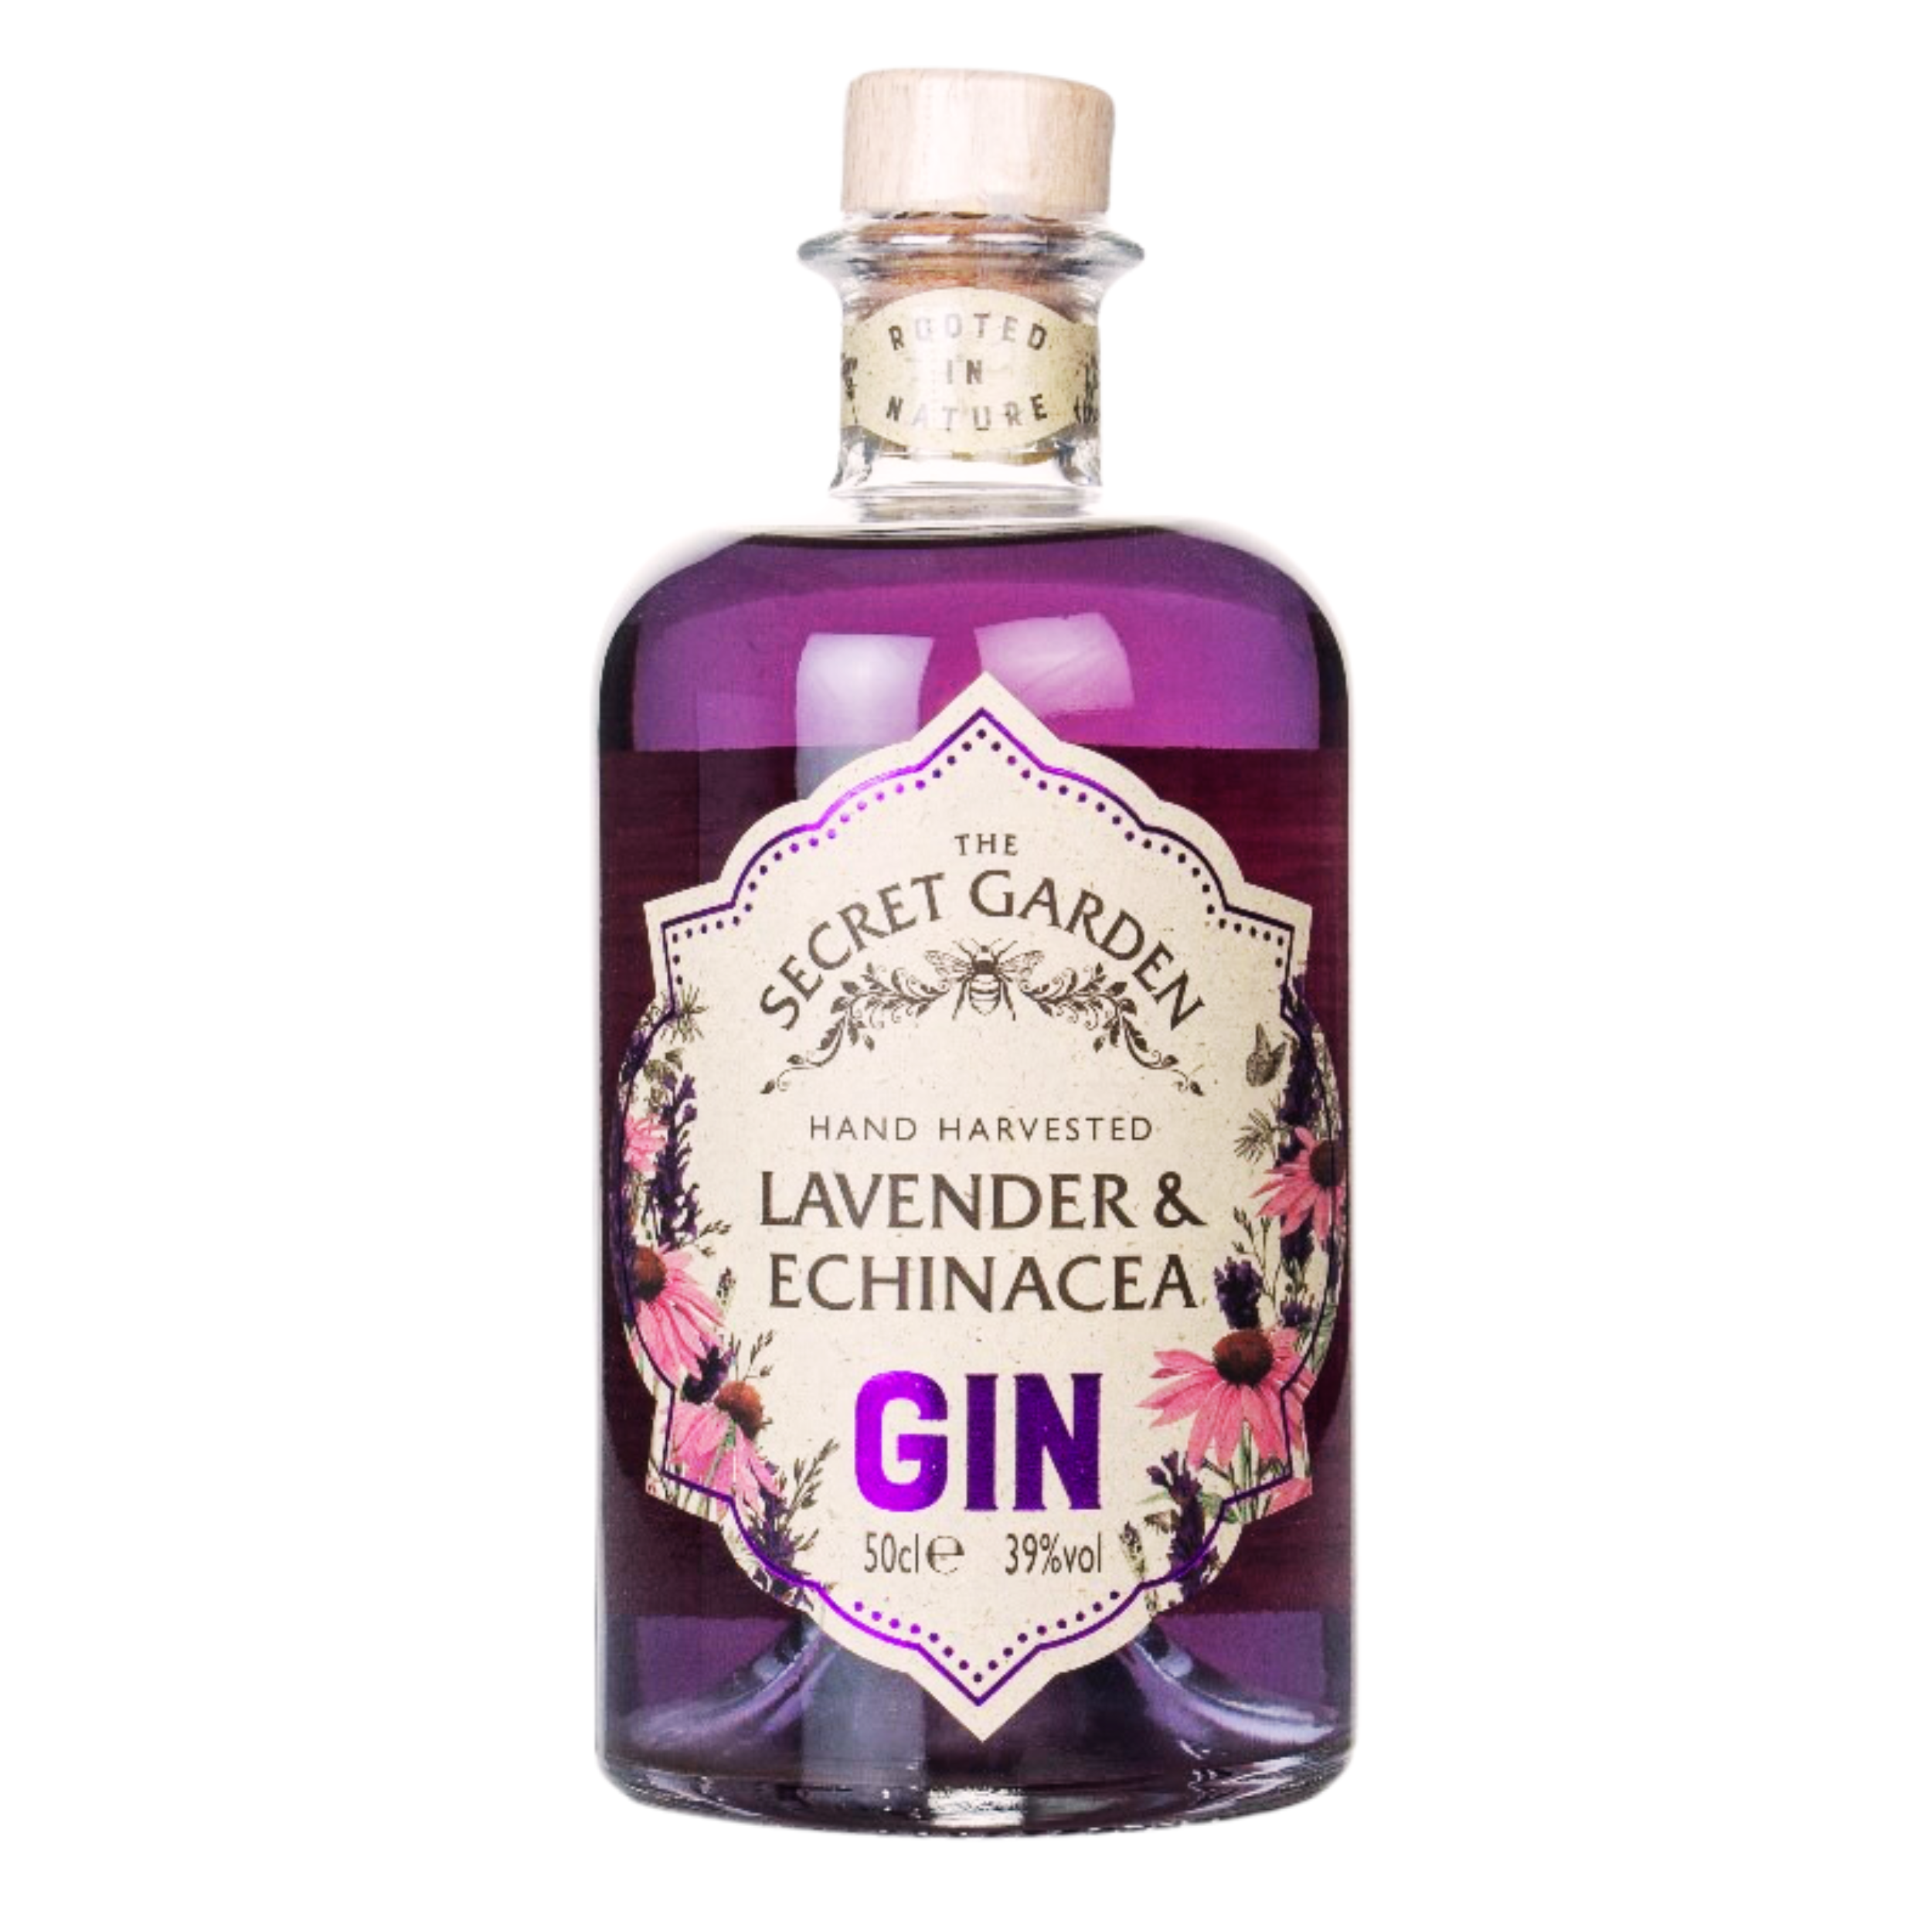 Lavender-Echinacea-The-Secret-Garden-Gin